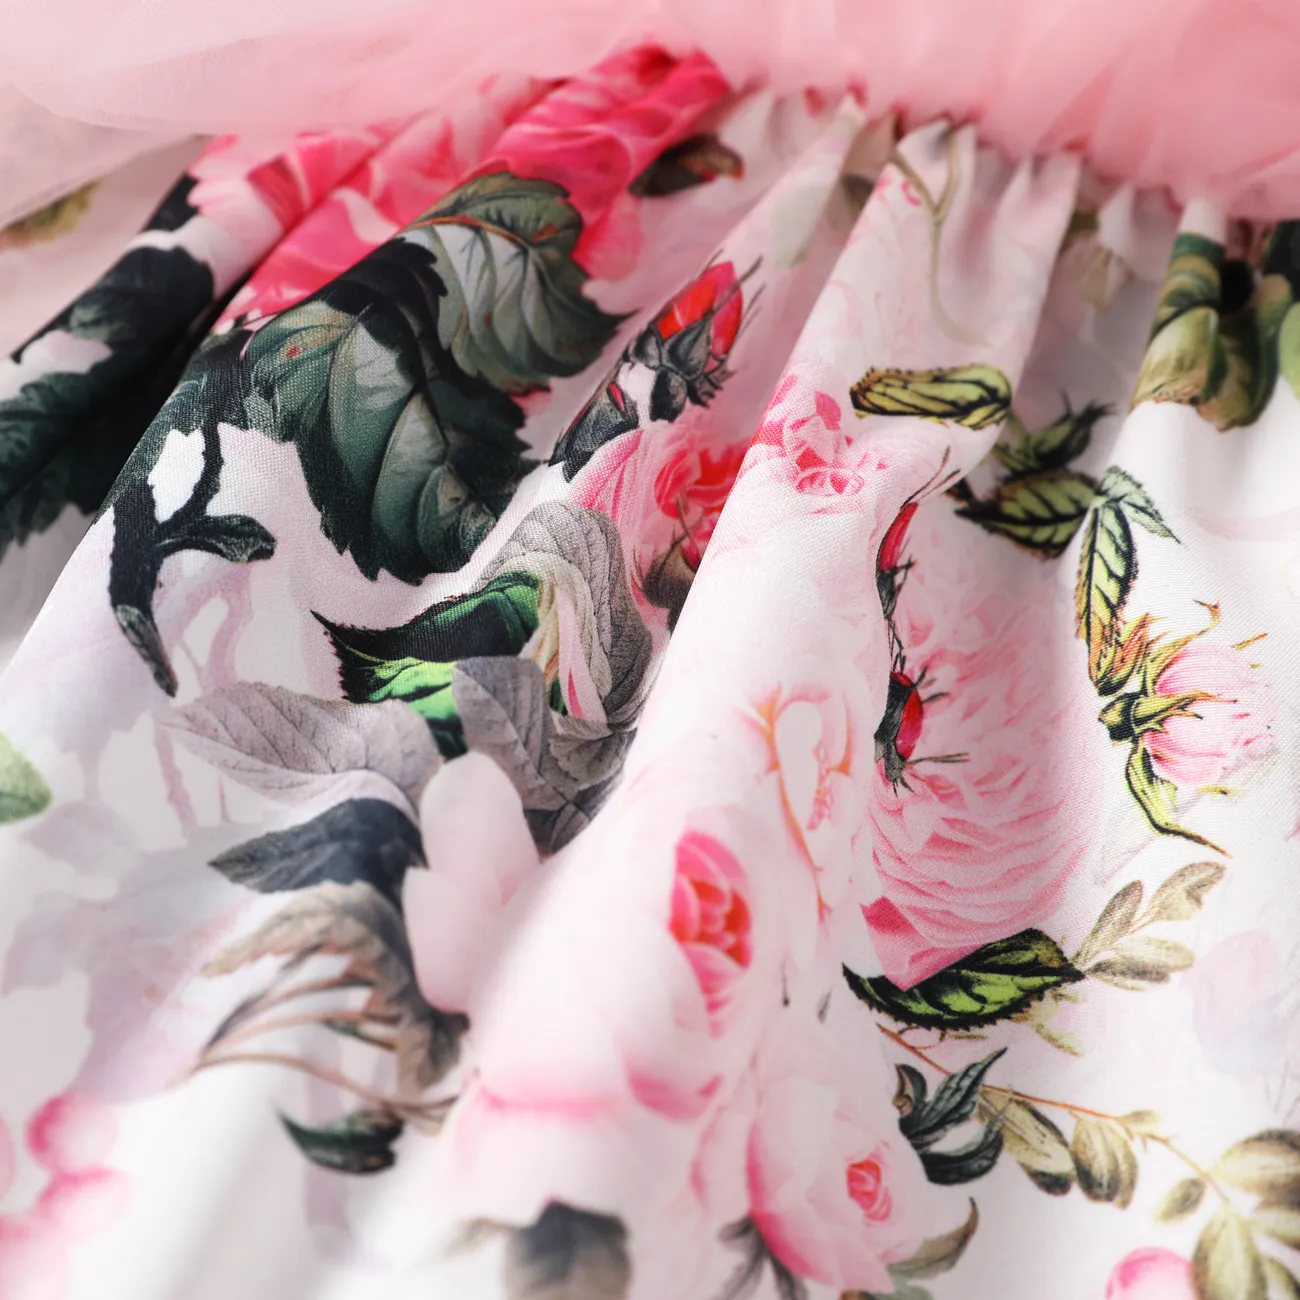 Baby Girl Lace Decor Mesh Floral Print Cami Dress Pink big image 1